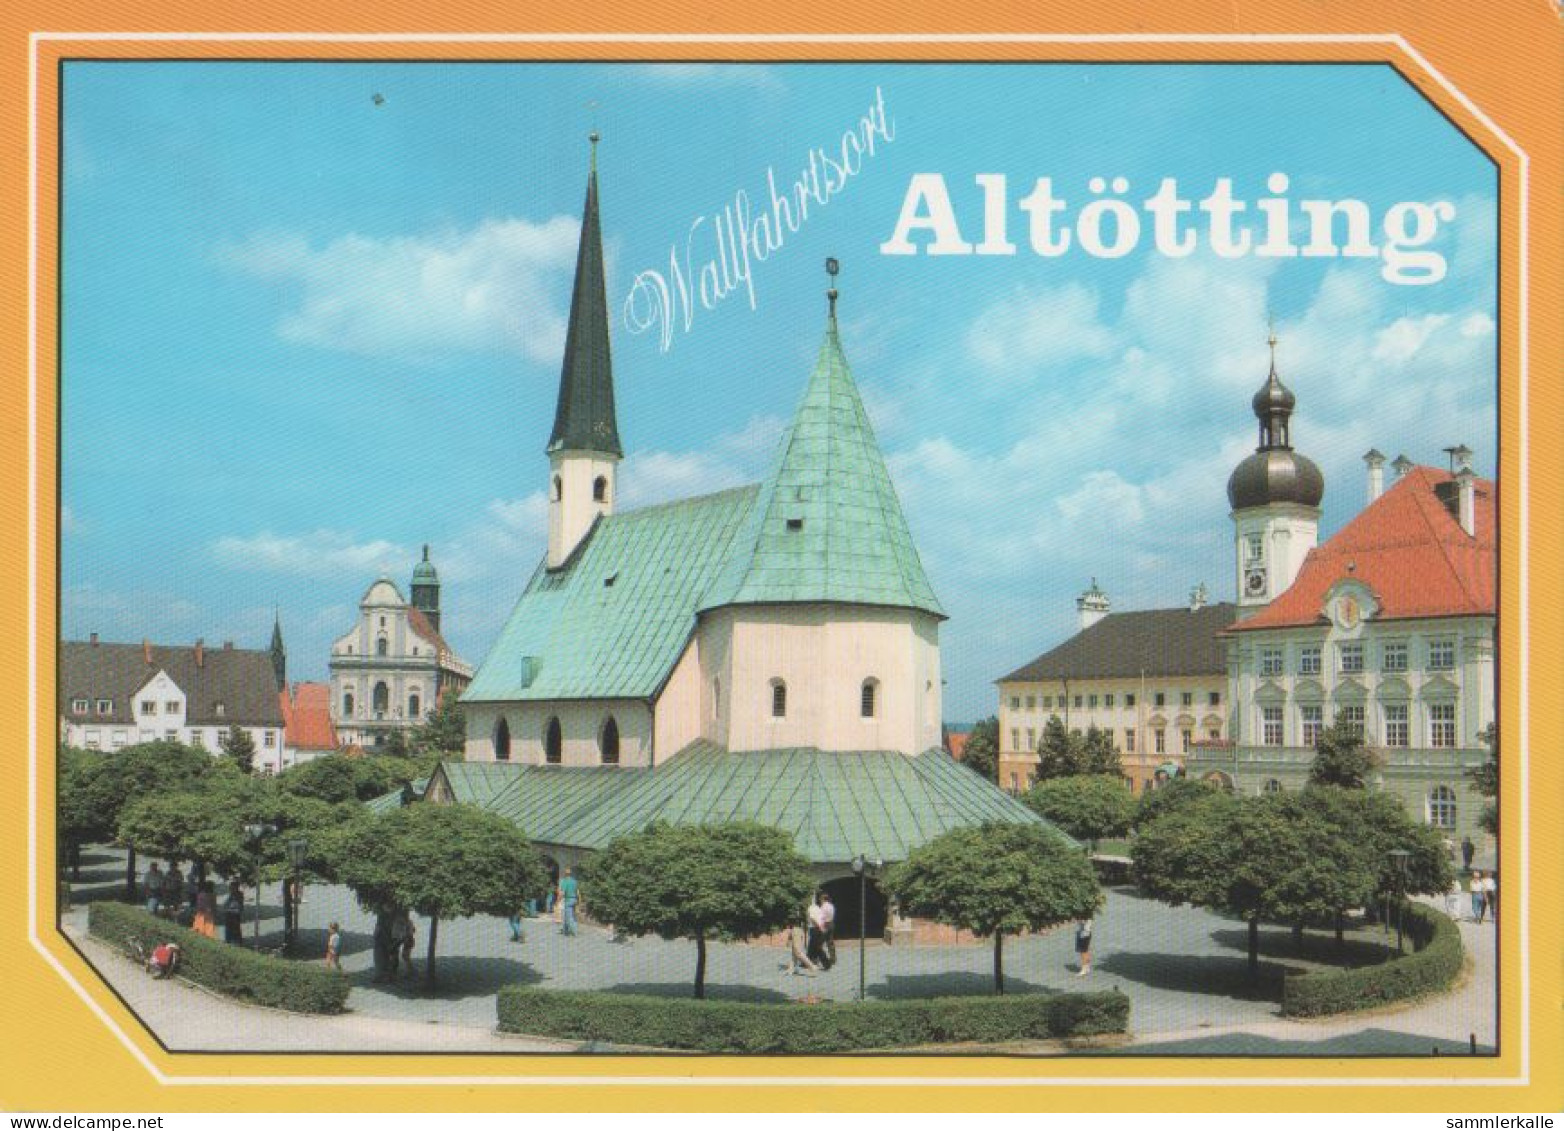 30111 - Altötting - 2004 - Altoetting